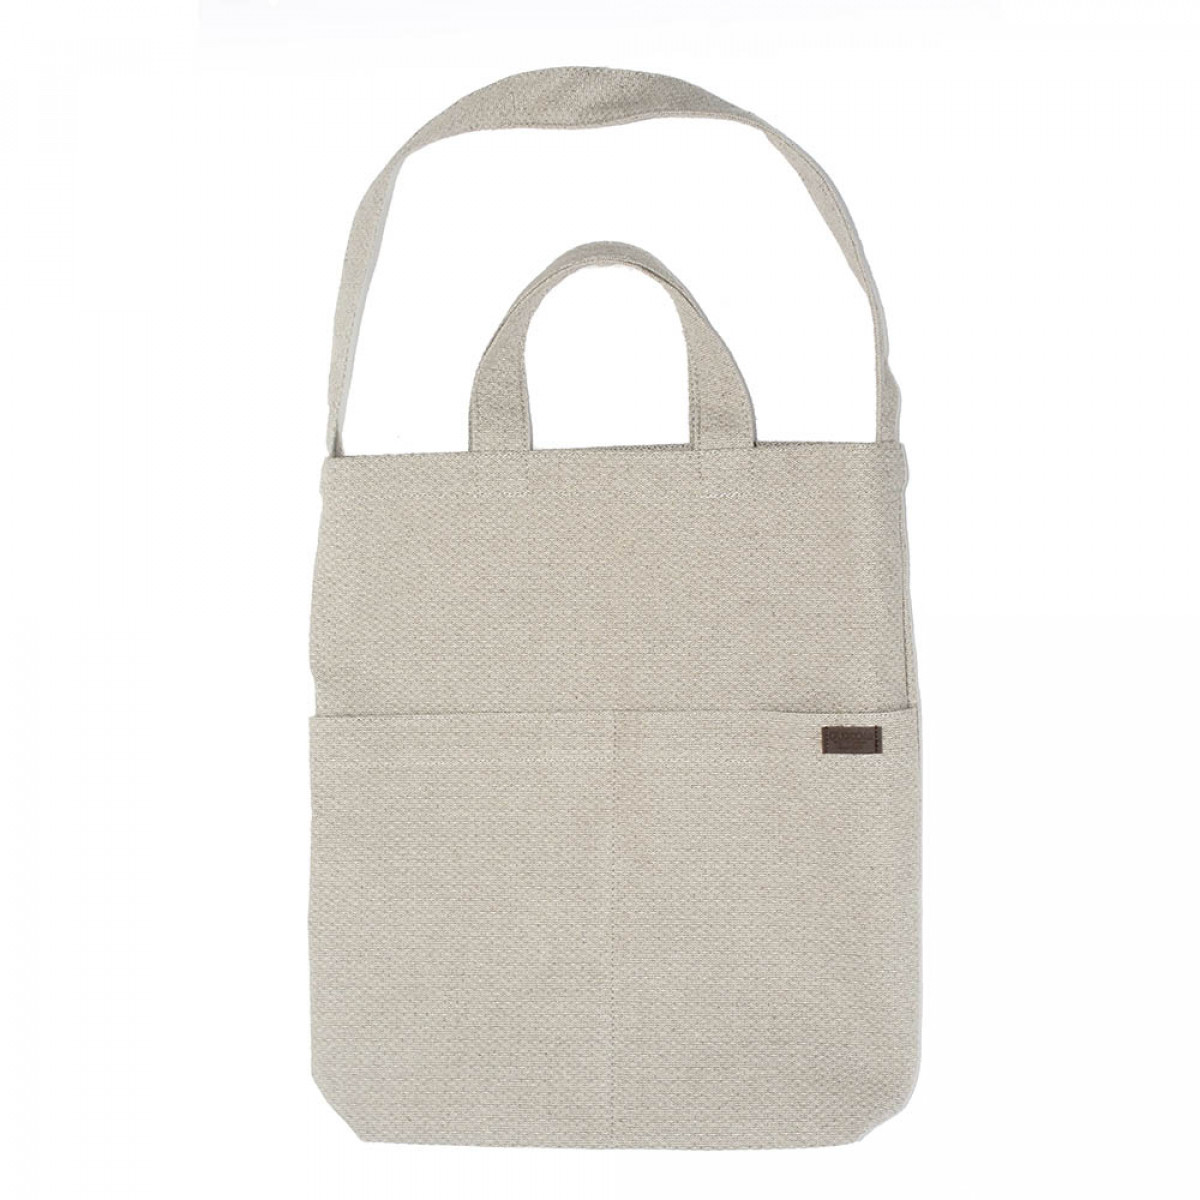 Flax Linen Bag, Beige